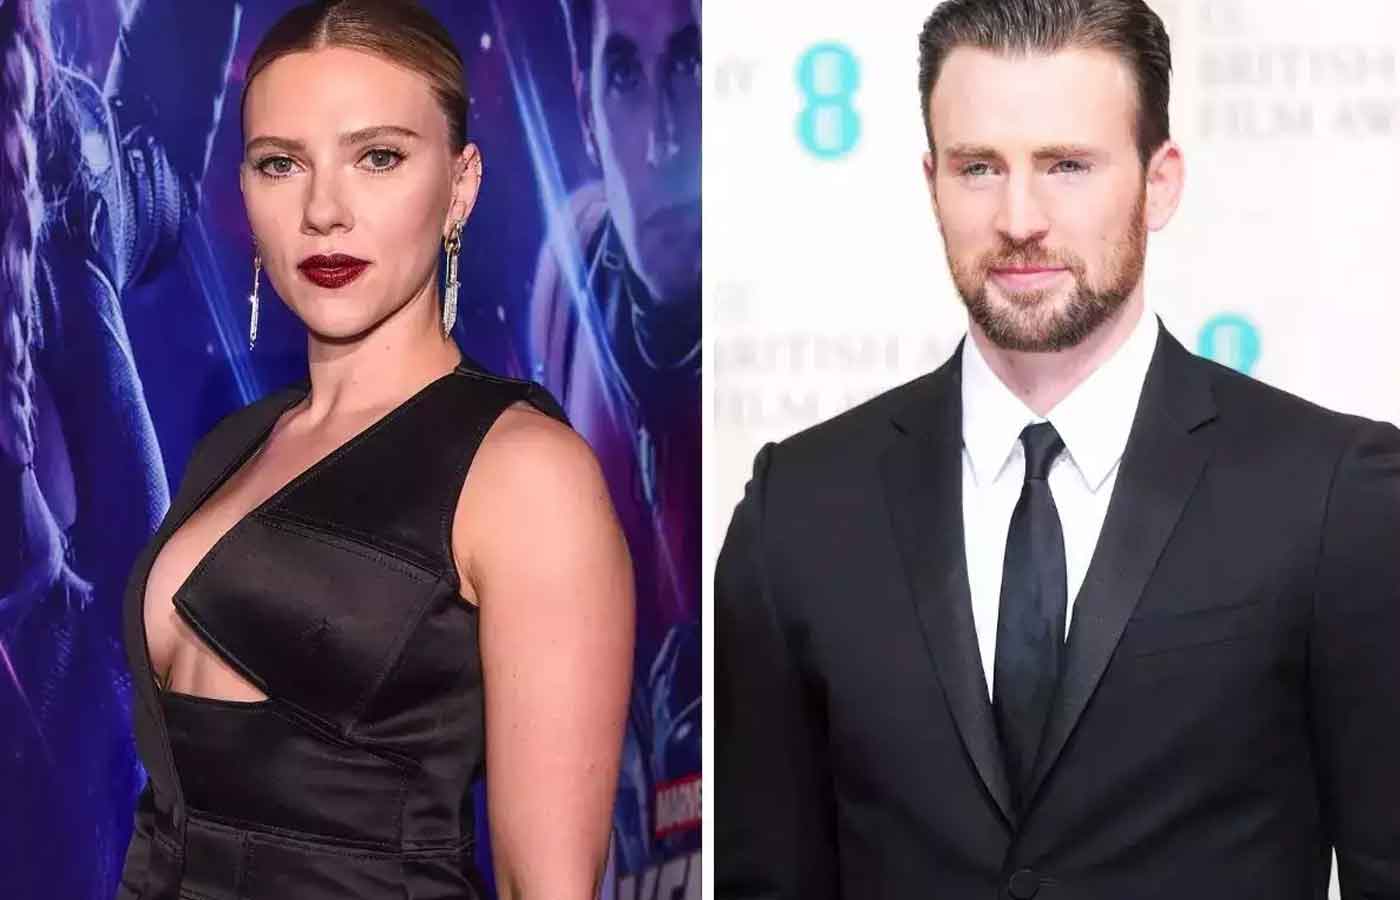 Chris-Evans-and-Scarlett-Johansson-Upcoming-Movie